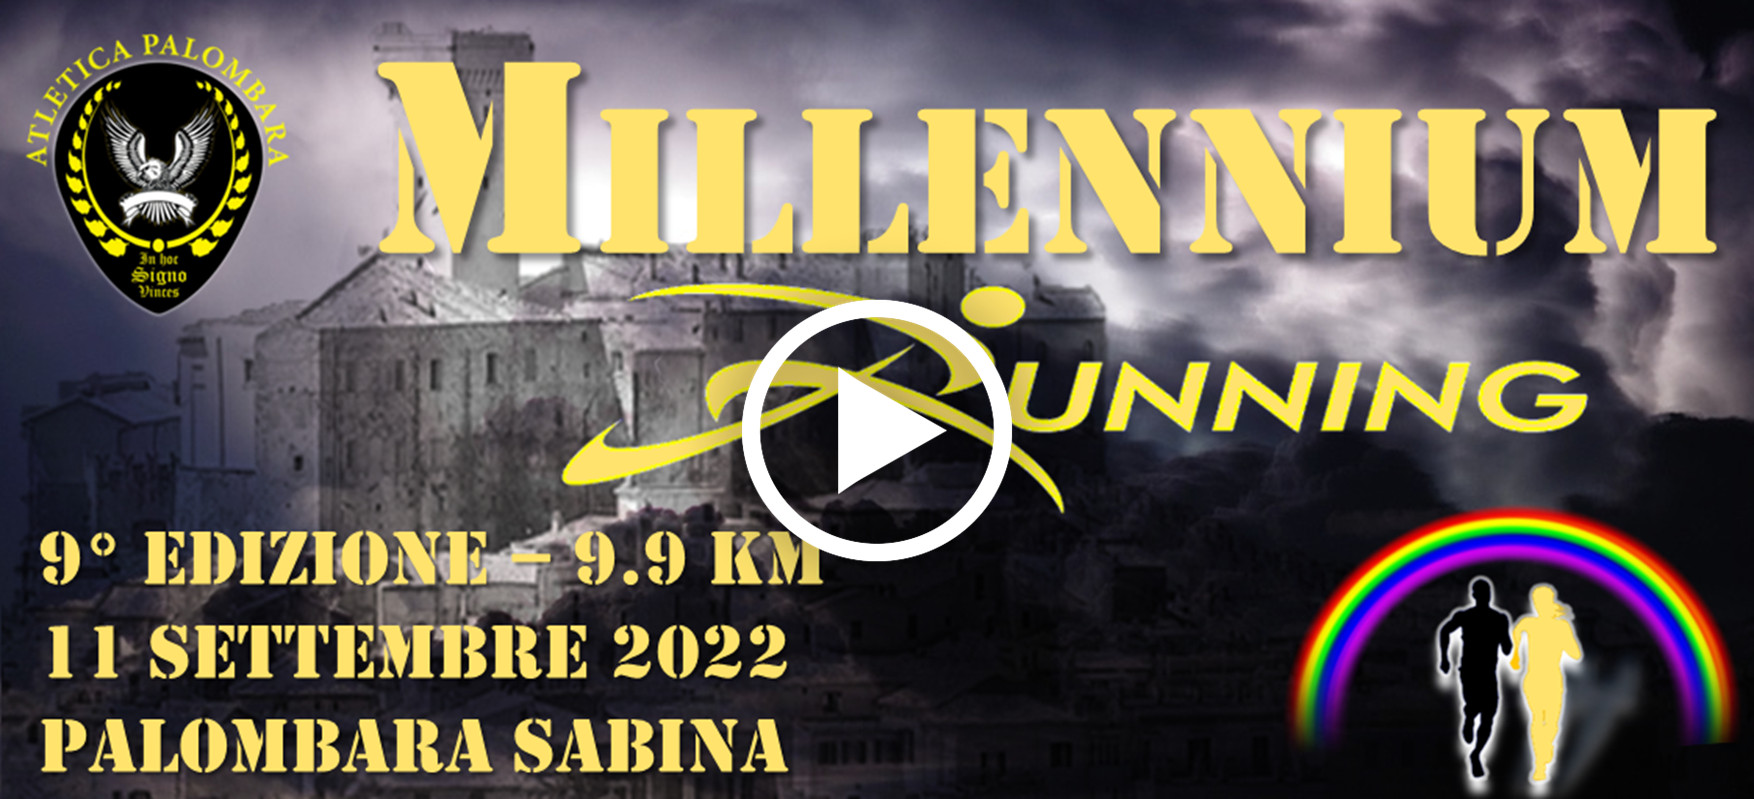 millennium_running_video